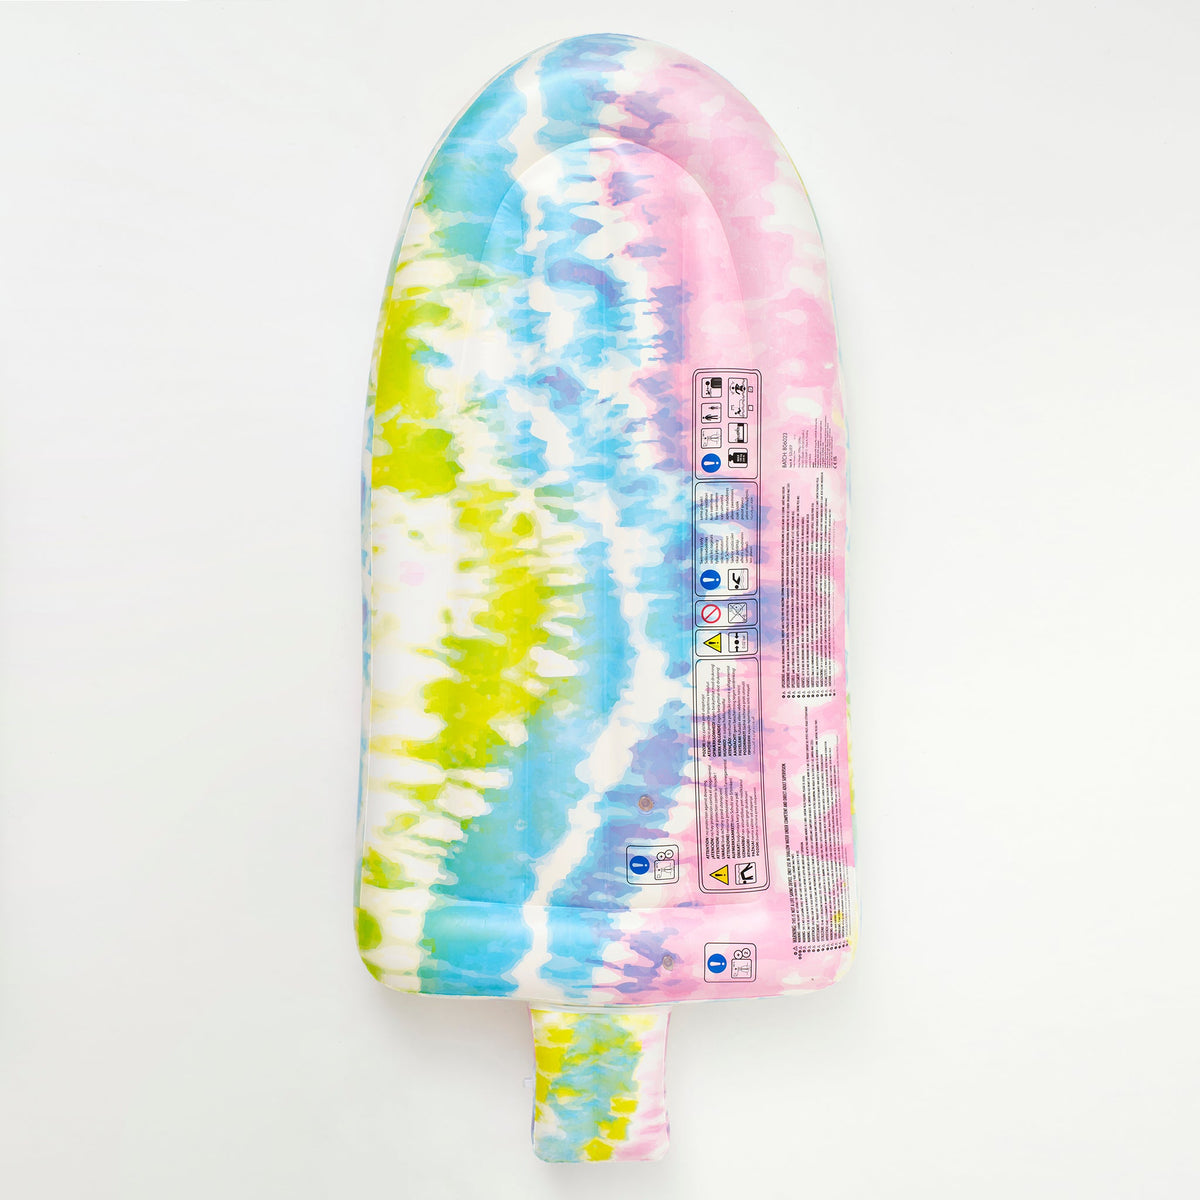 SunnyLife Luxe Lie-On Float - Ice Pop Tie Dye